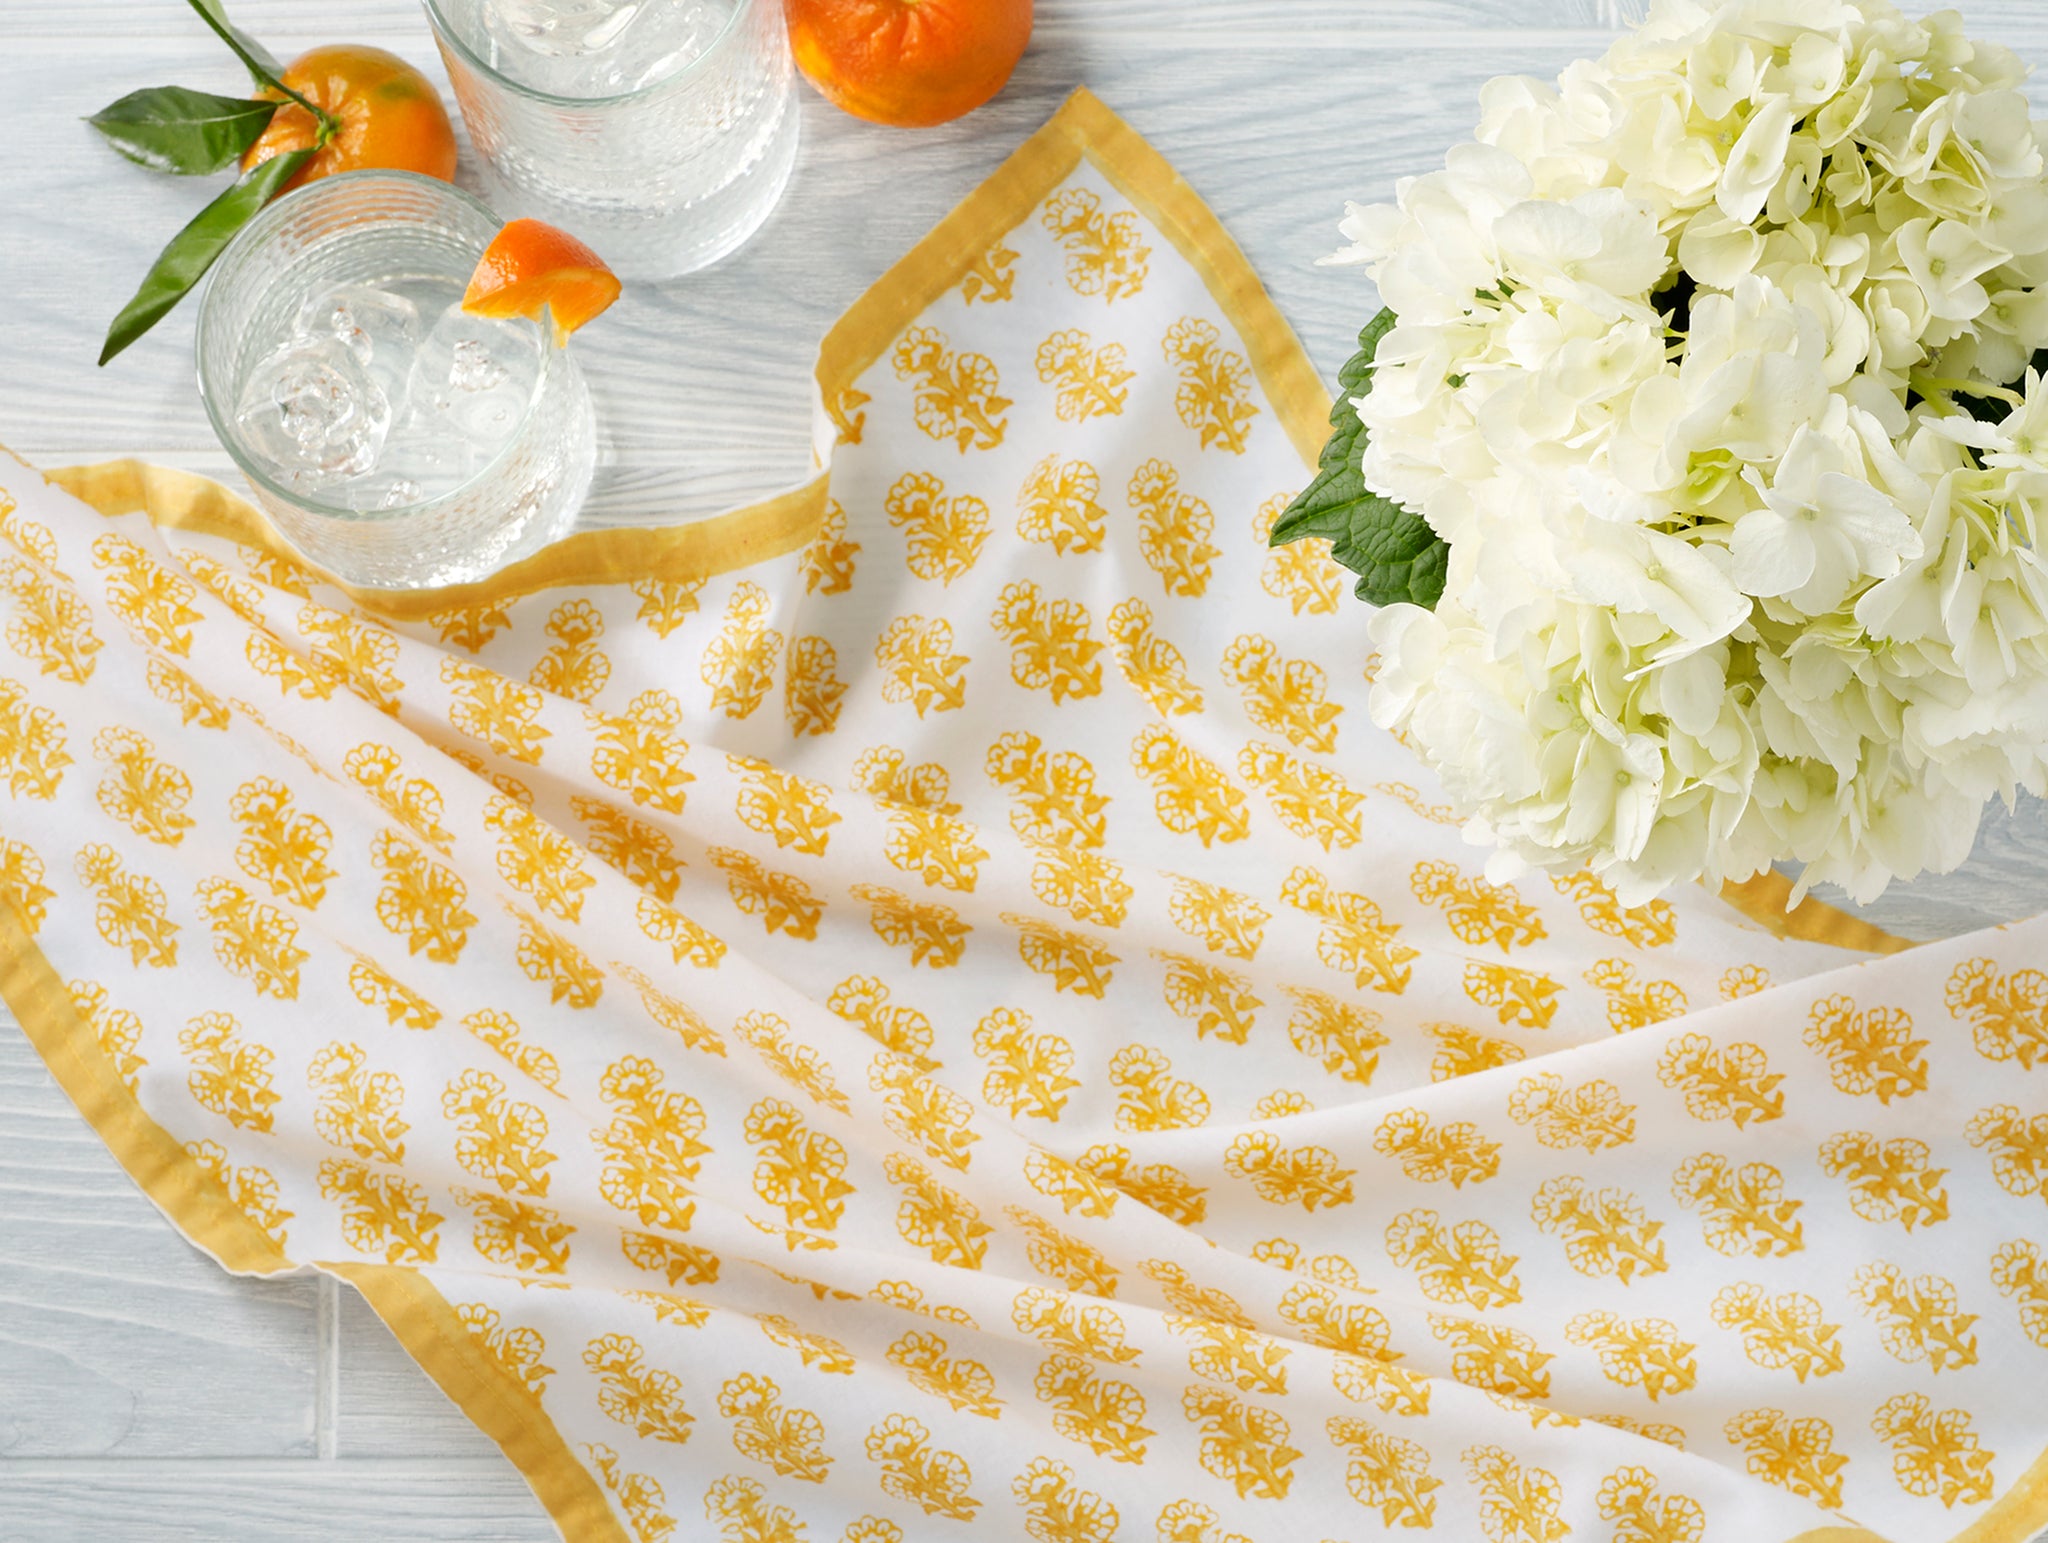 Mini Flowers on Yellow - Cloth Napkins